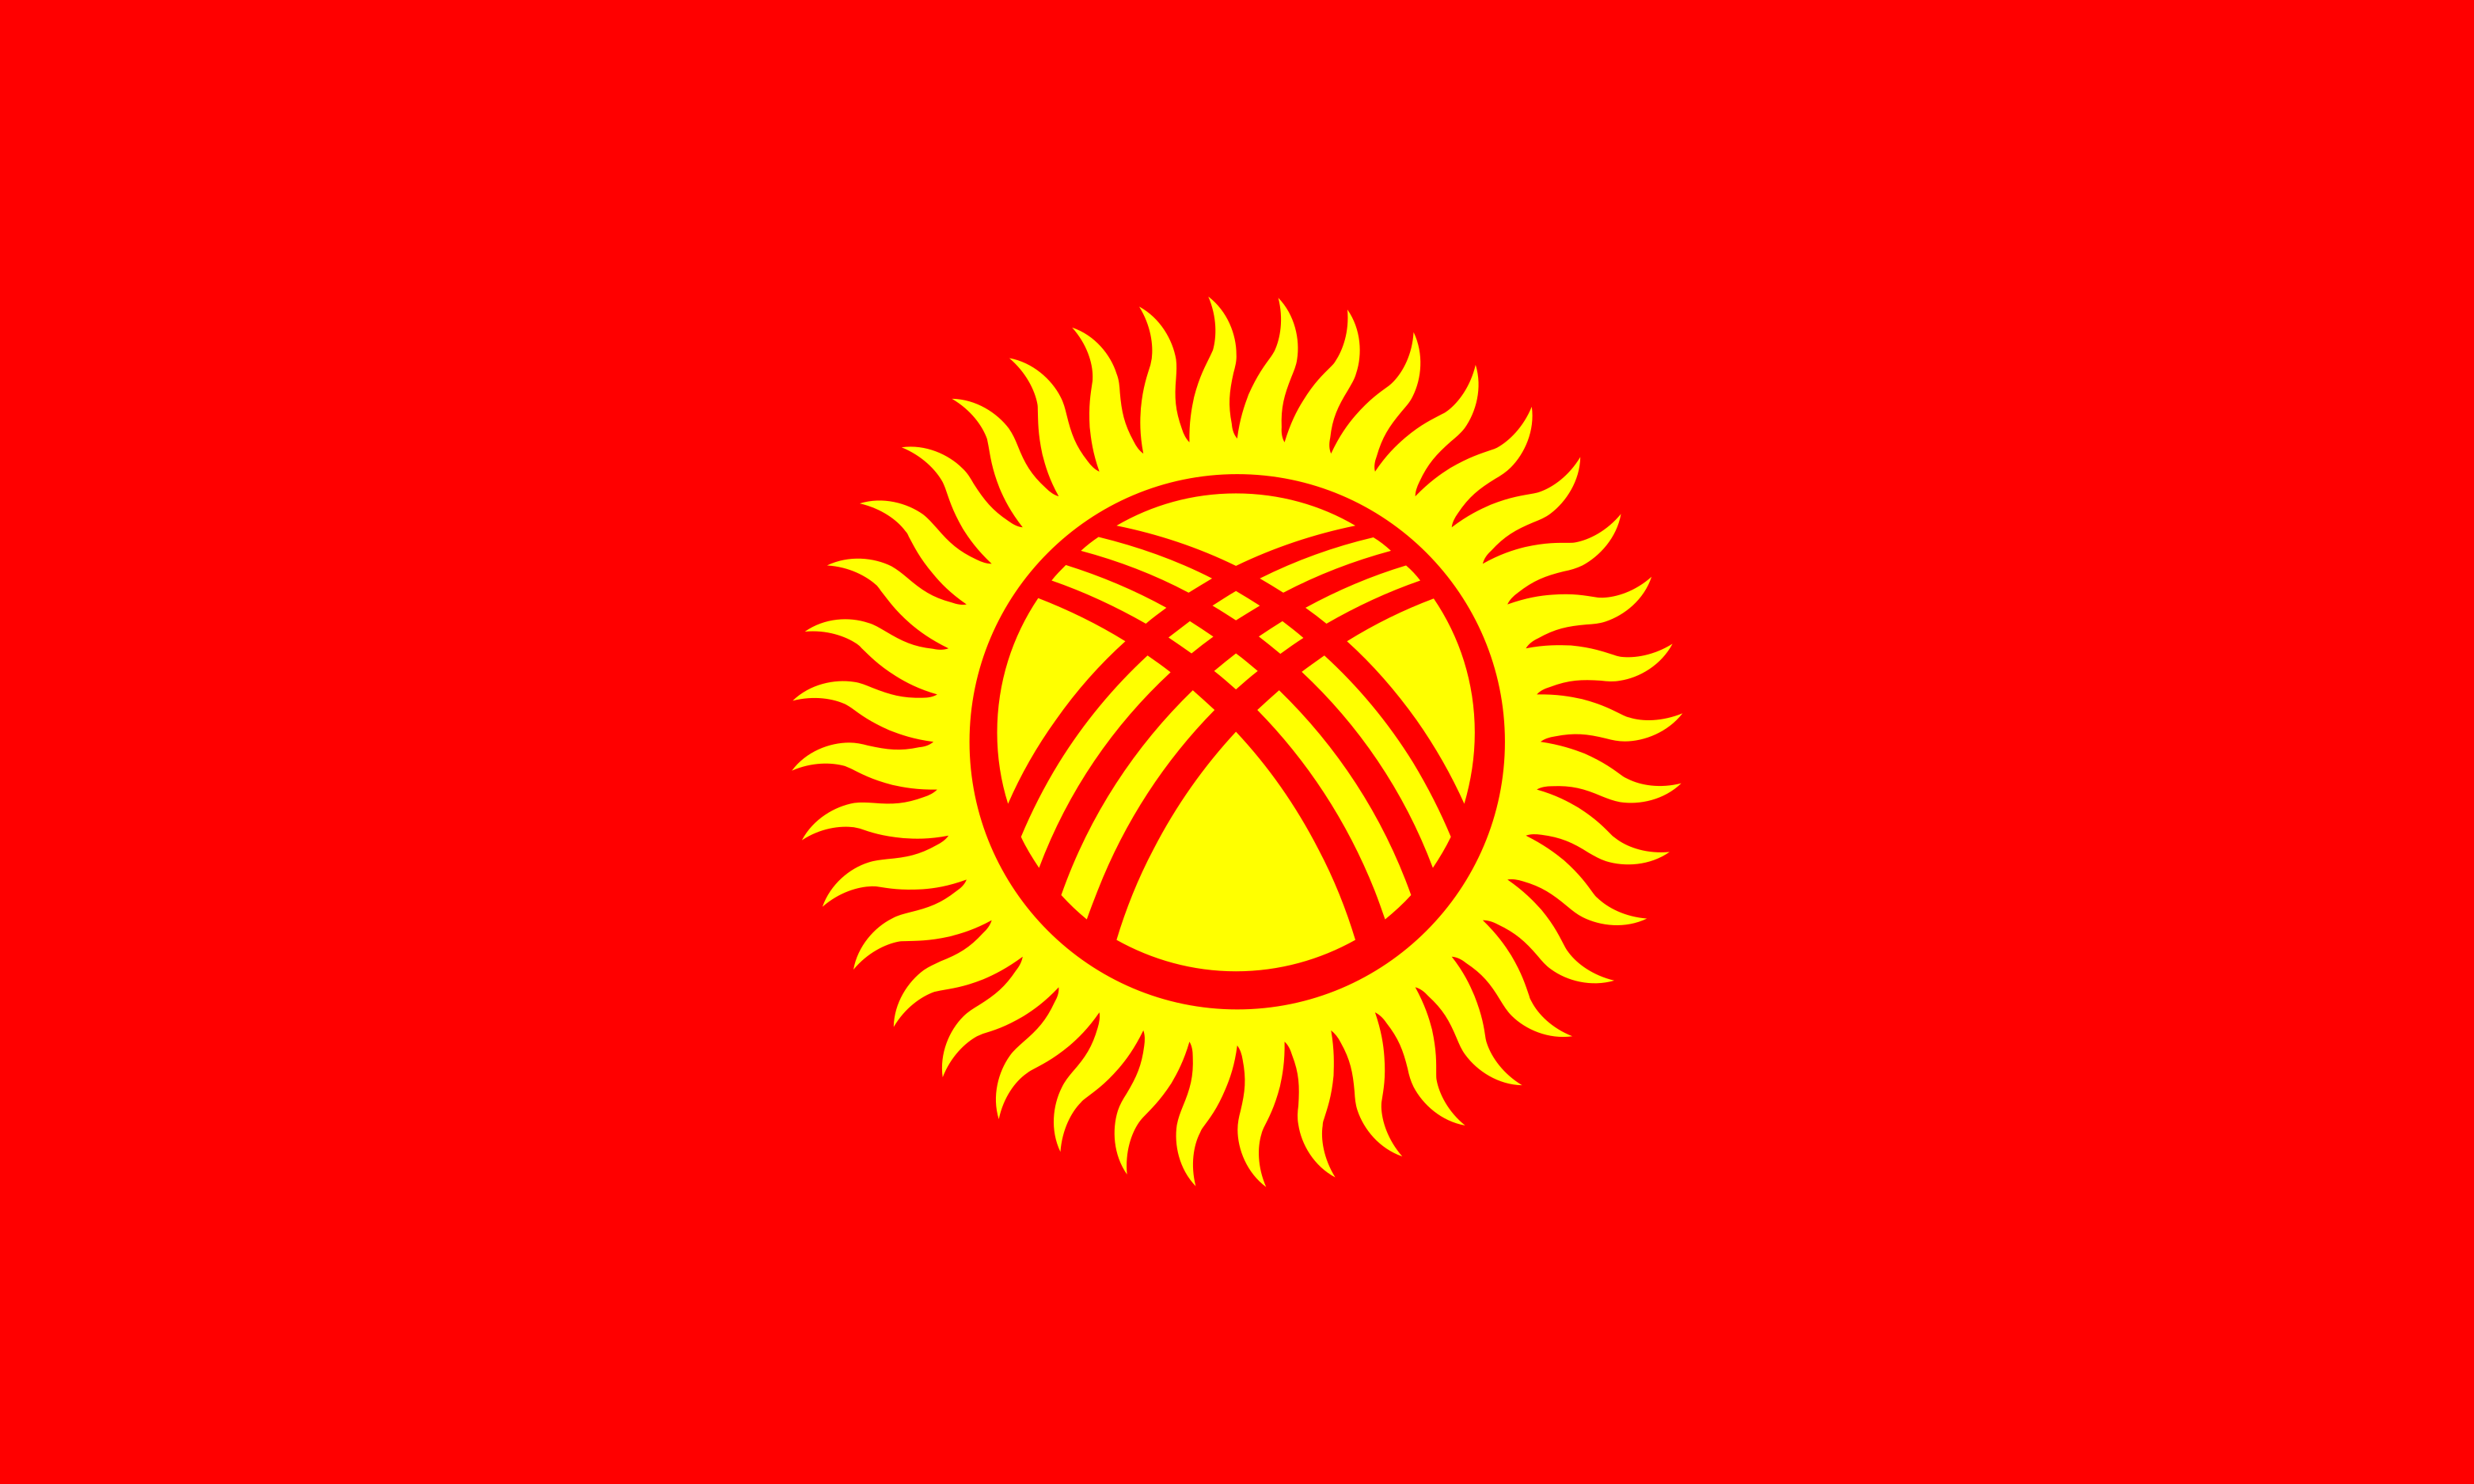 Kyrgyzstan Flag Image - Free Download